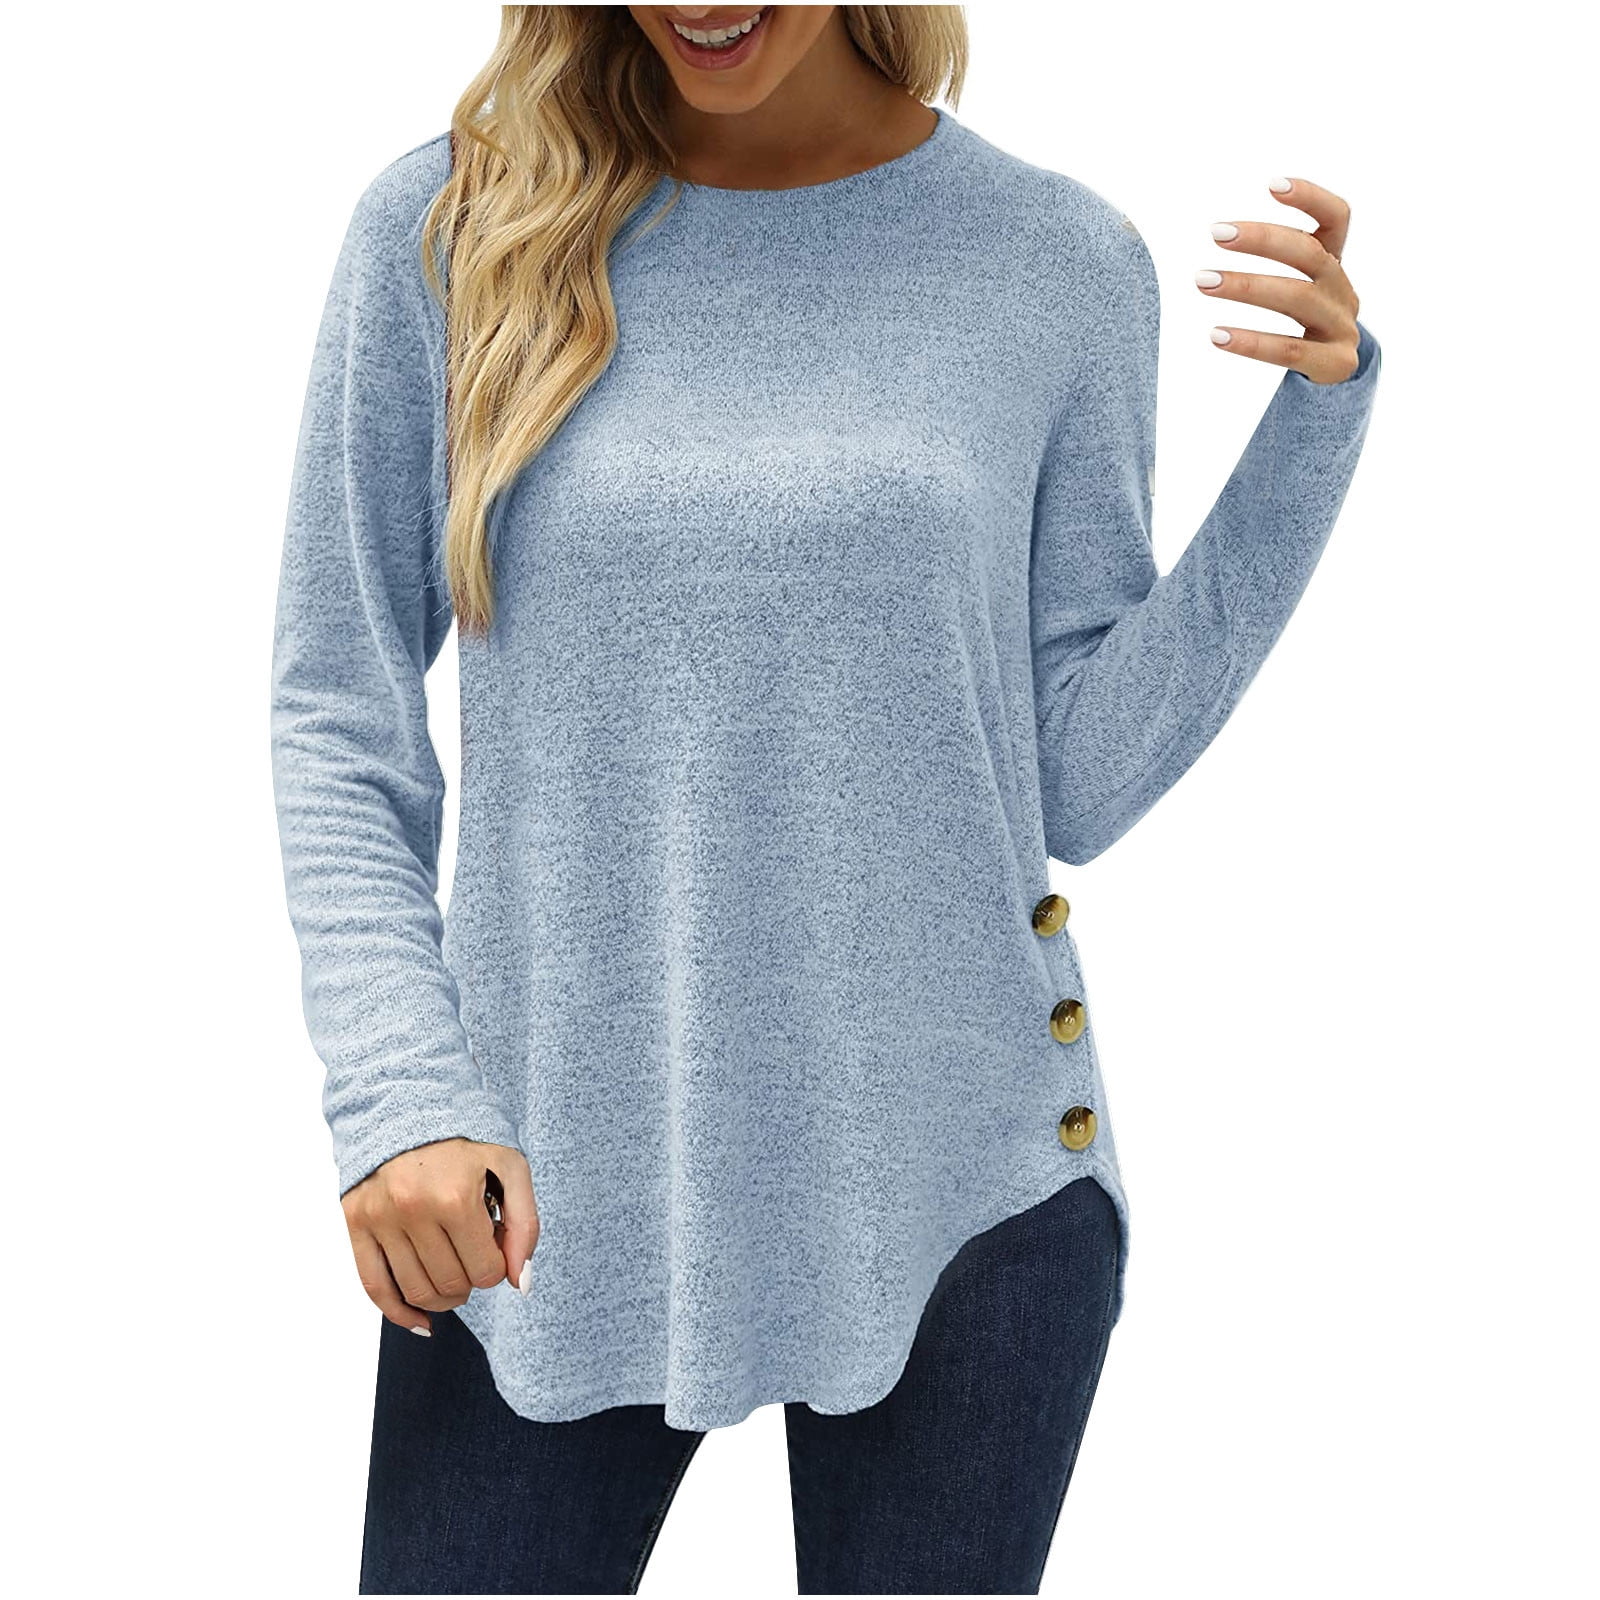 XFLWAM Women's Tunic Tops Long Sleeve Casual T-Shirts Crewneck Button Side  Sweatshirts Soild Color Blouse Blue XXL 